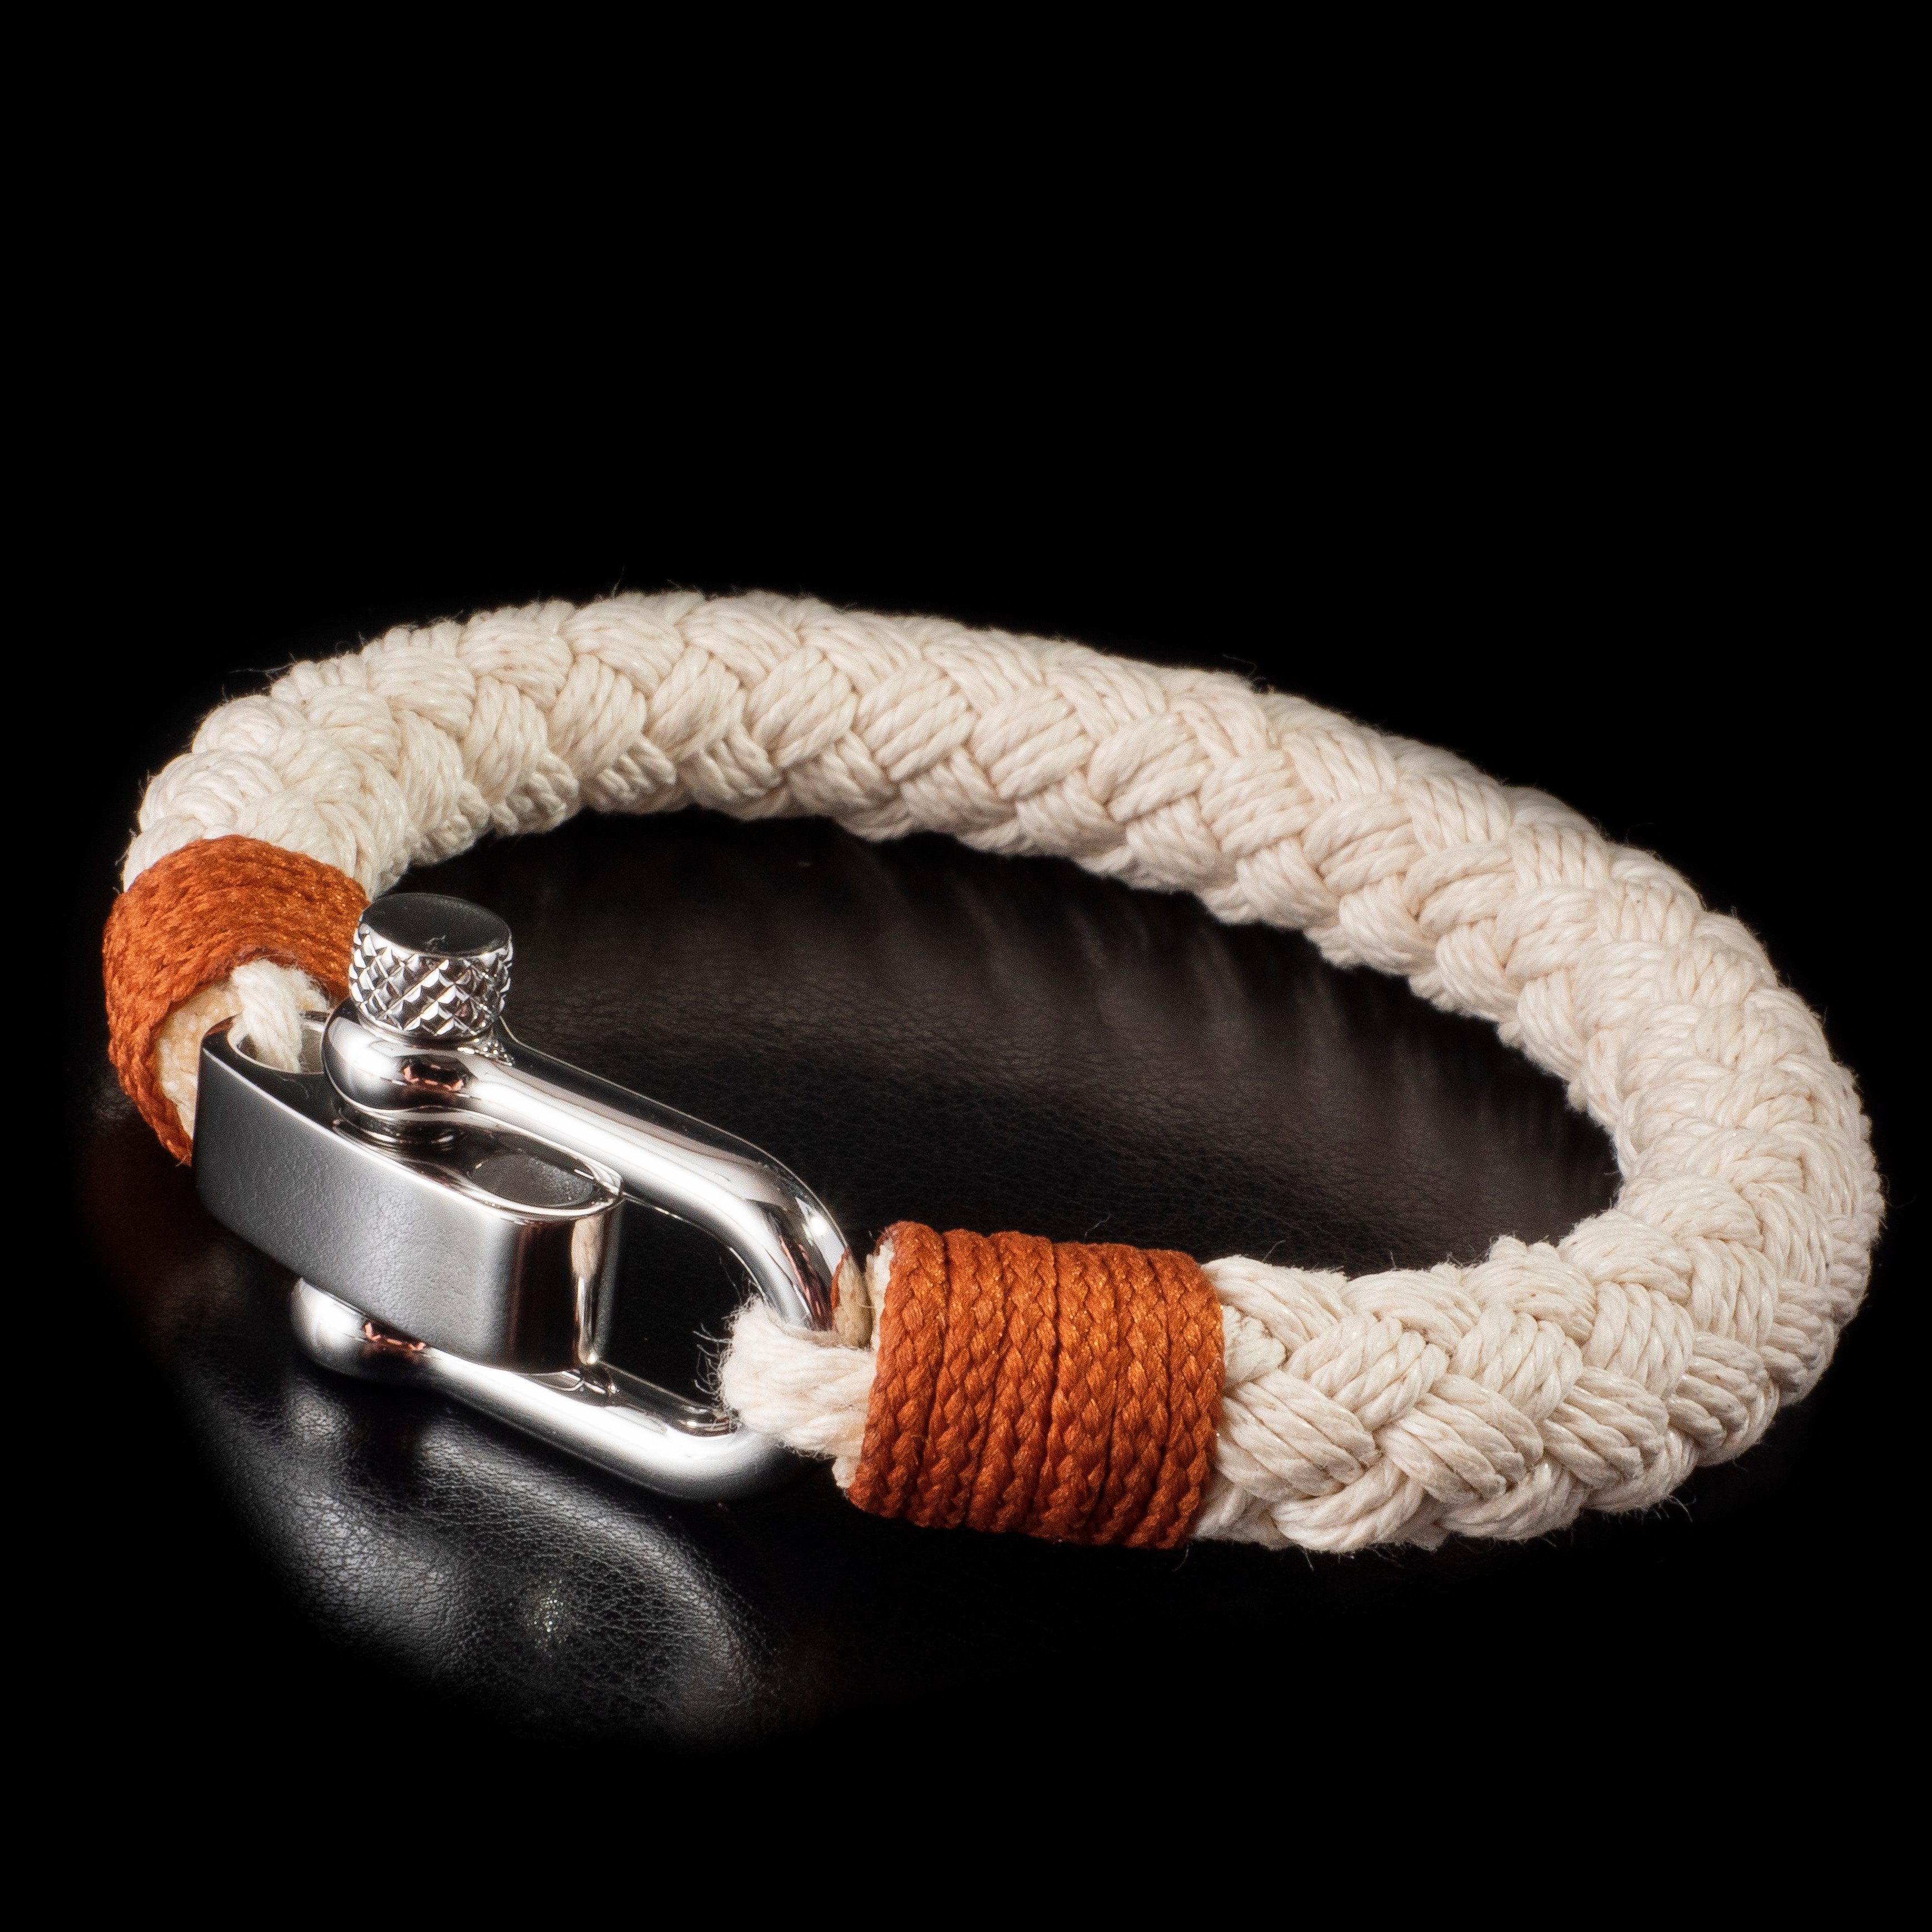 nautics, verschluss Schäckel (Edelstahl, Maritime Segeltau Armband Casual handgefertigt) "RONA" Armband aus UNIQAL.de Style, Segeltau,